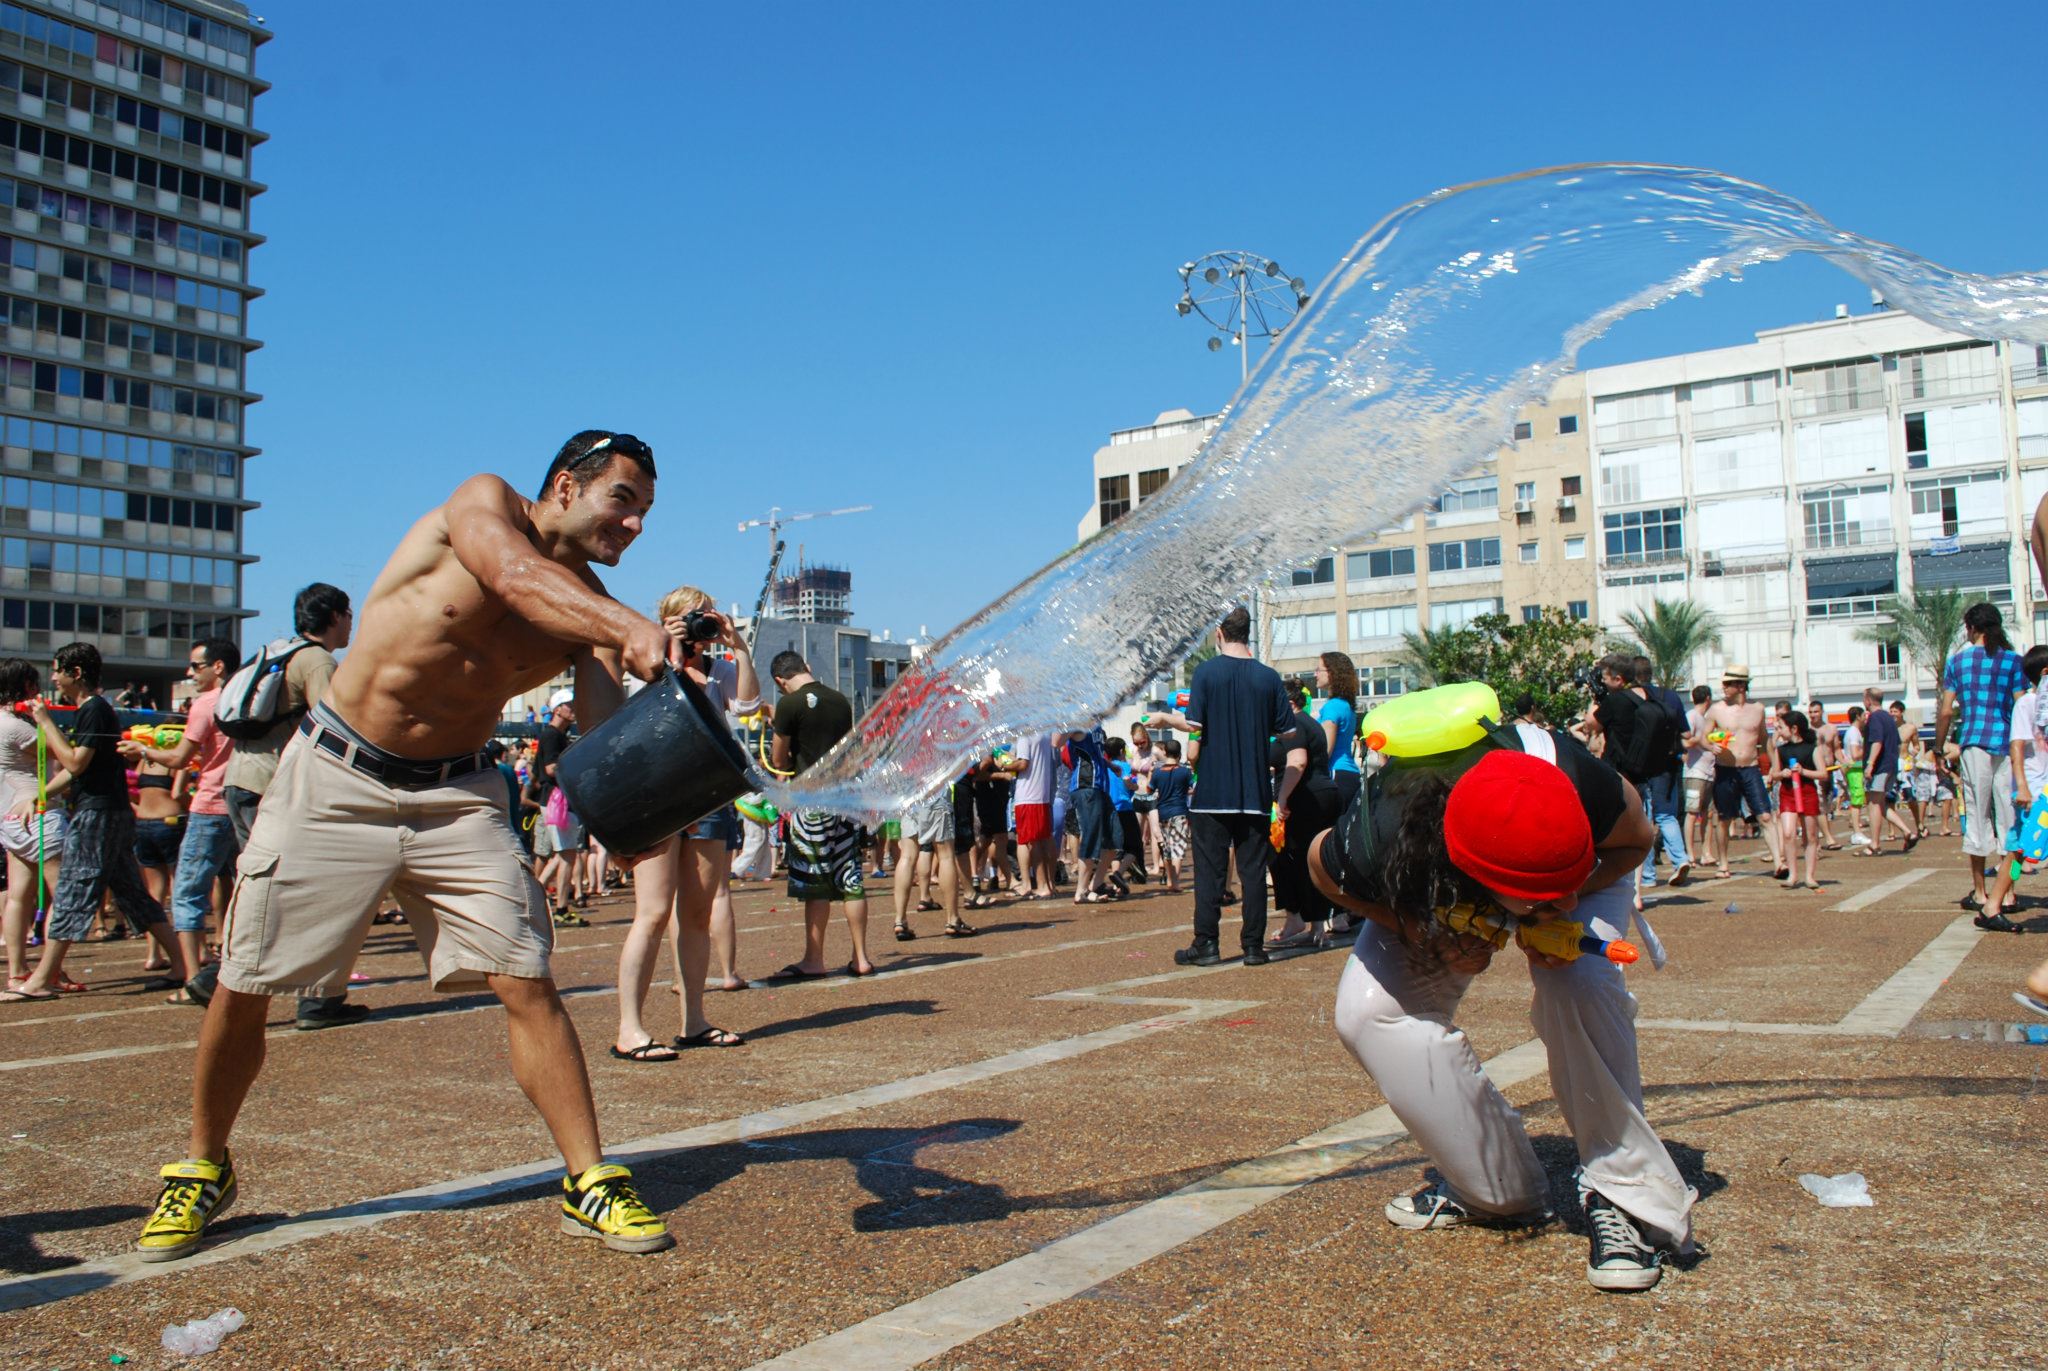 Splashing fun at Rabin Square in Tel Aviv. (photo courtesy of Water War TLV's Facebook page)